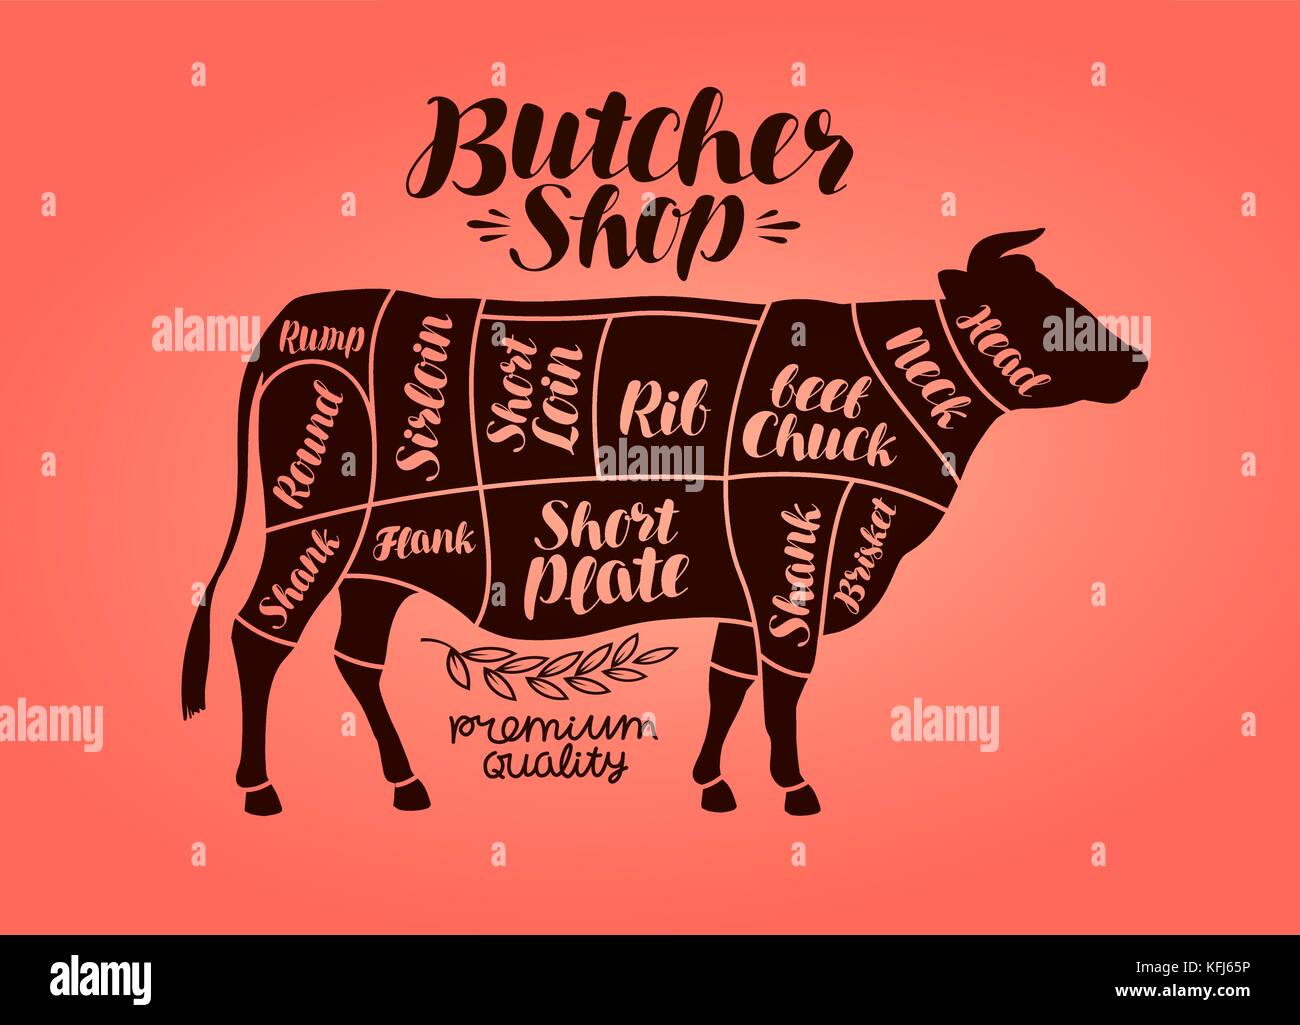 Butcher shop, meat cut charts. Beef, cow, steak concept. Vector illustration Stock Vector